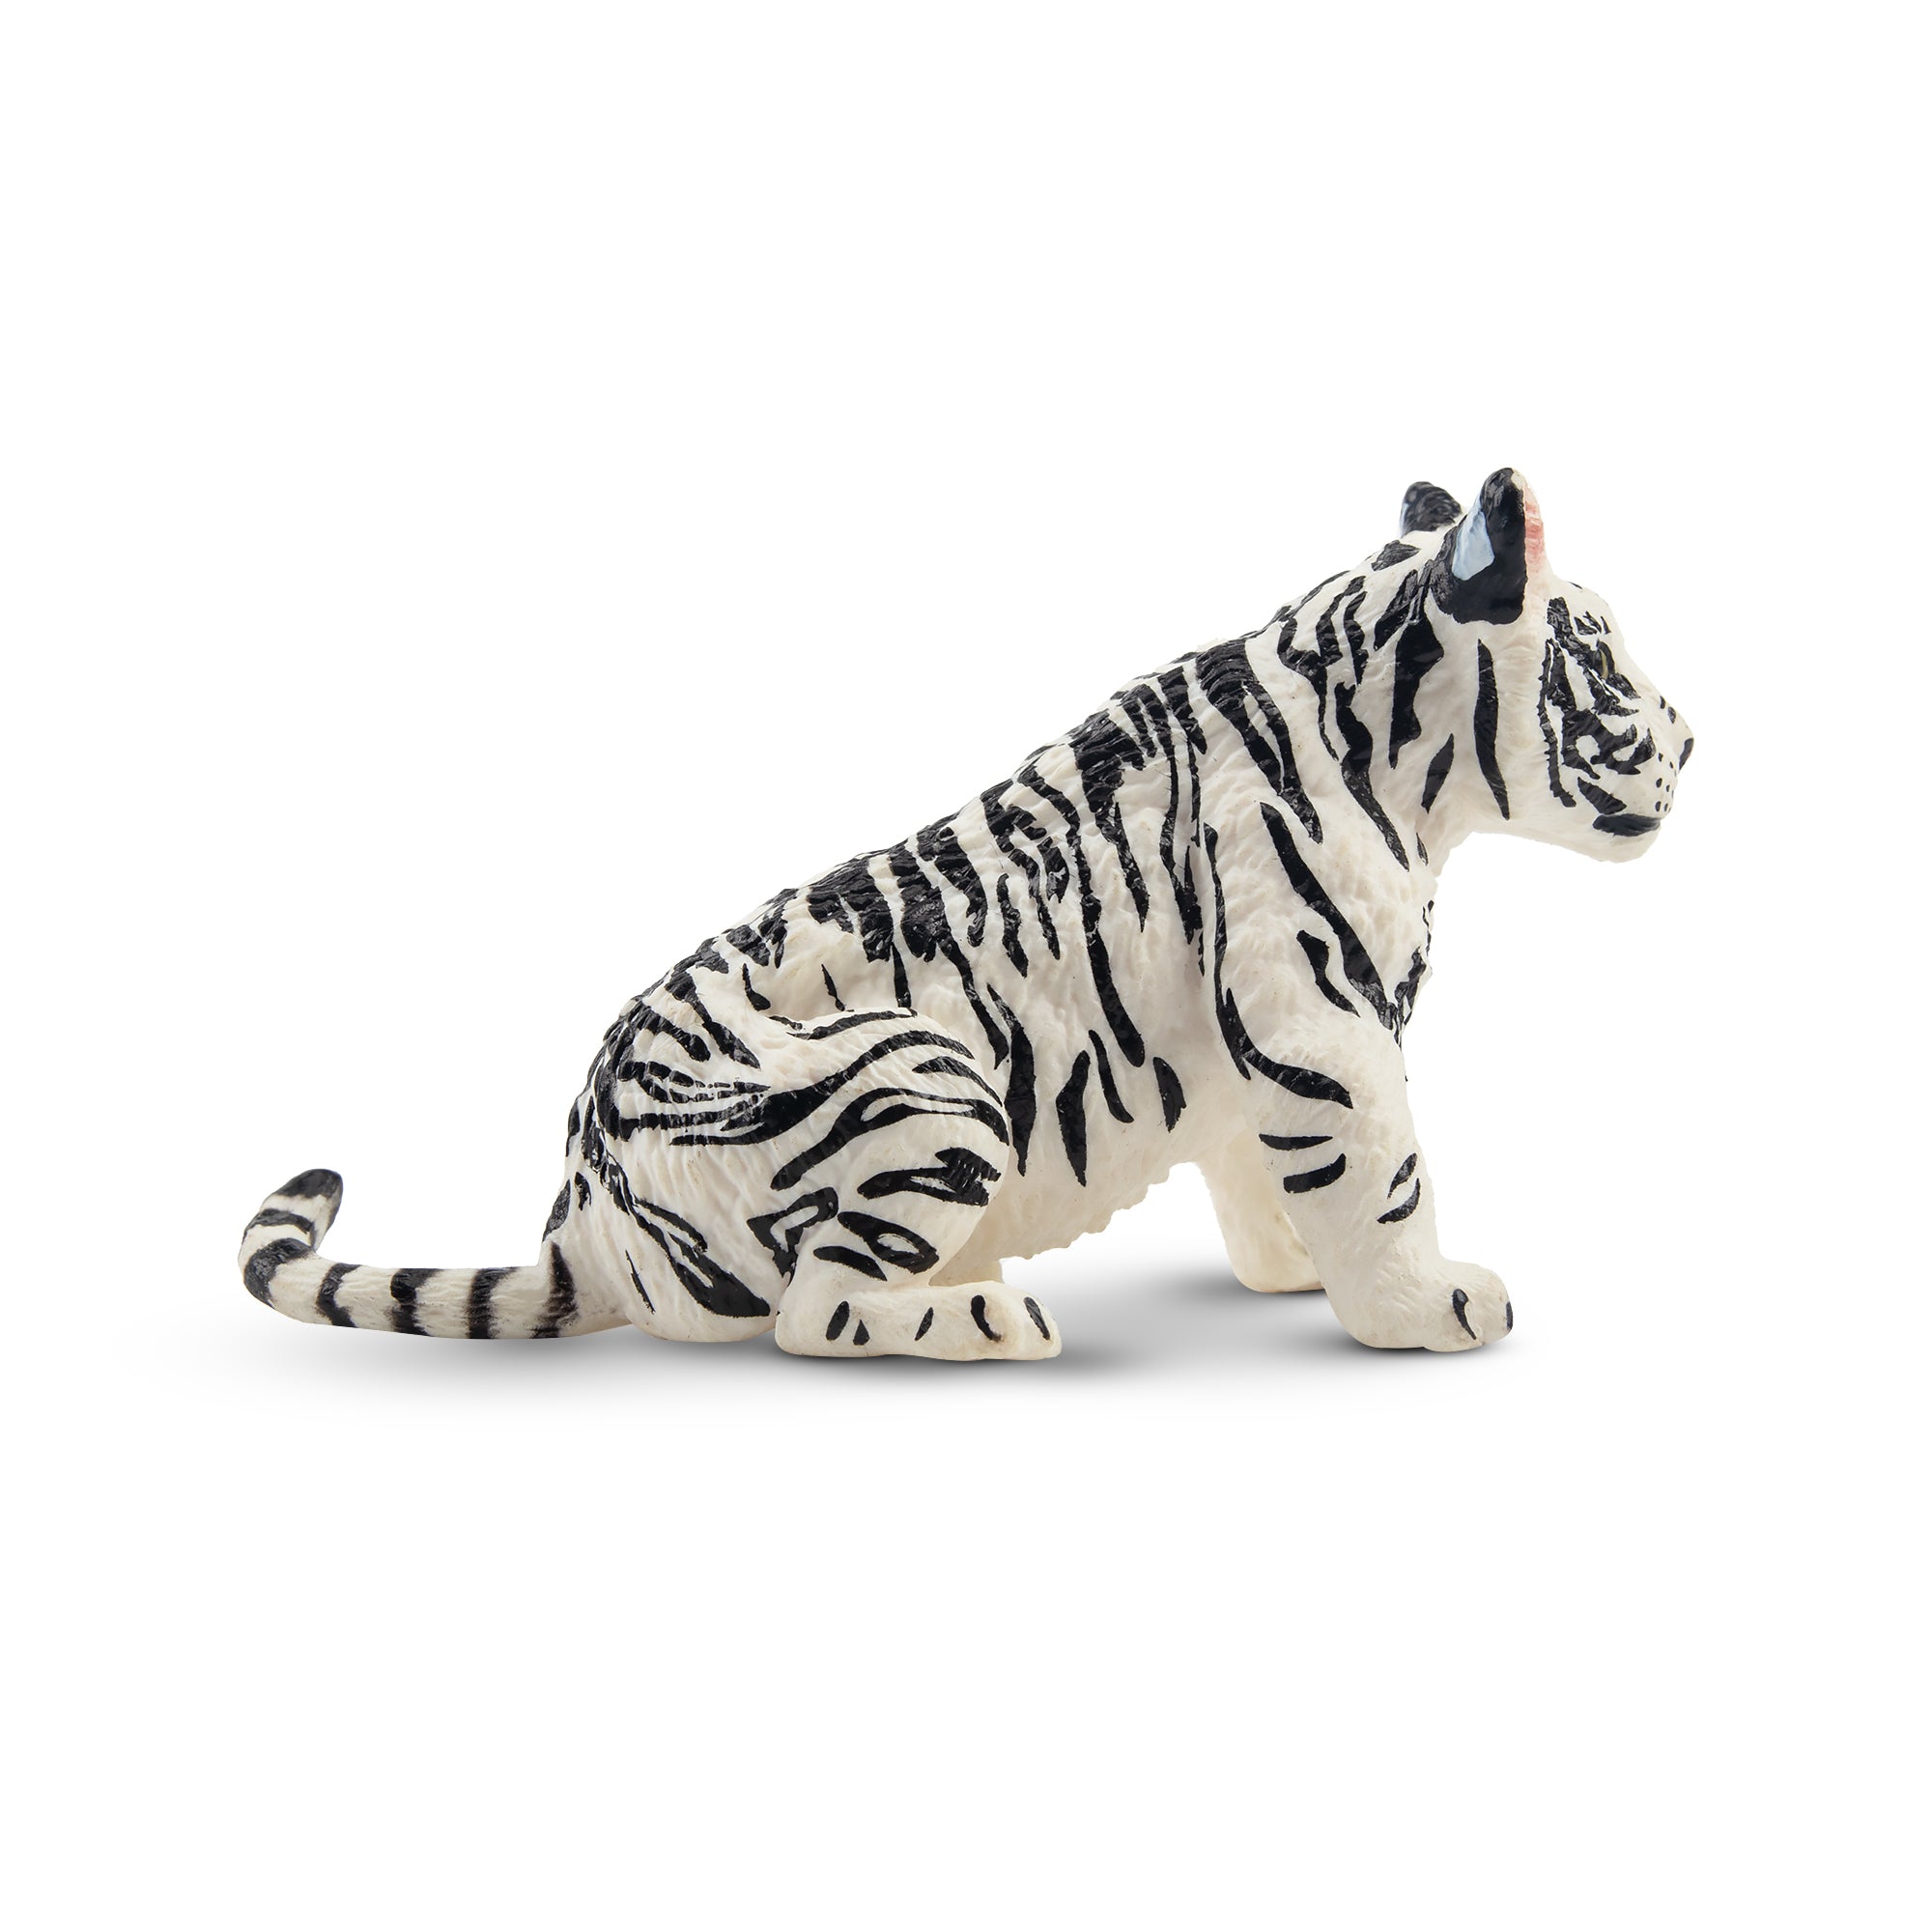 Toymany Sitting White Tiger Cub Figurine Toy